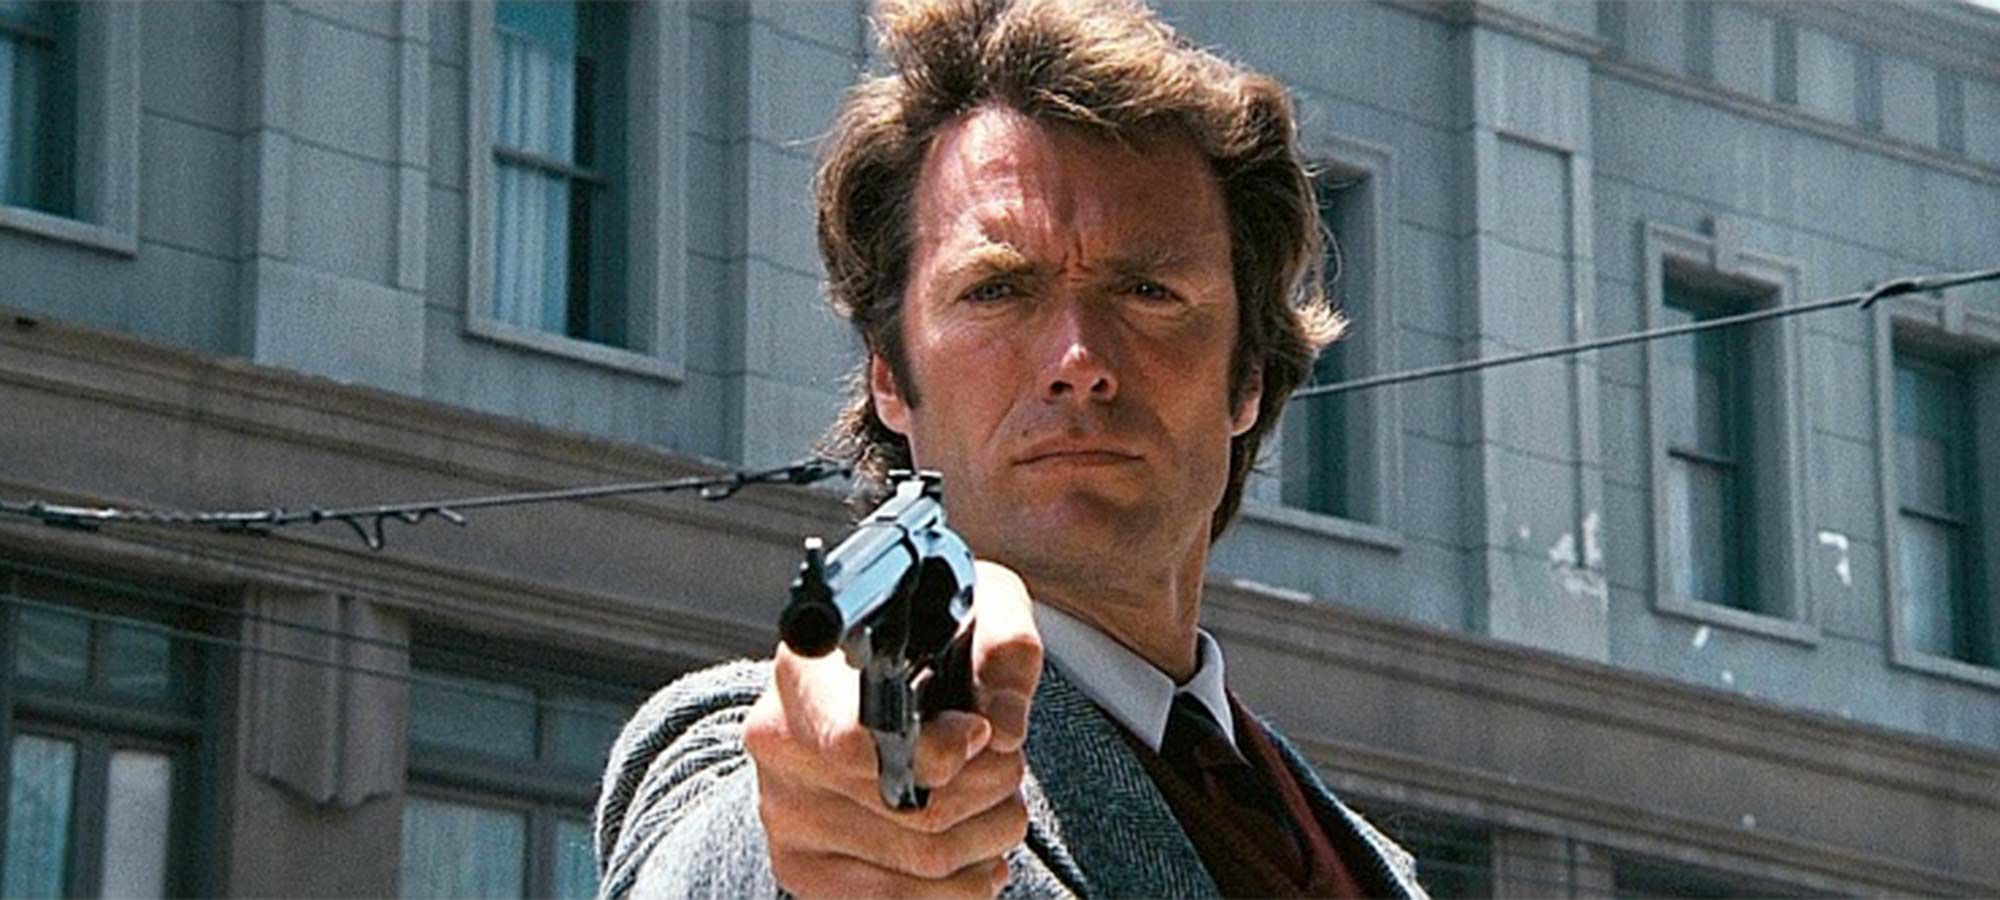 Guns Of Clint Eastwood Movies 1971 19 Range 365